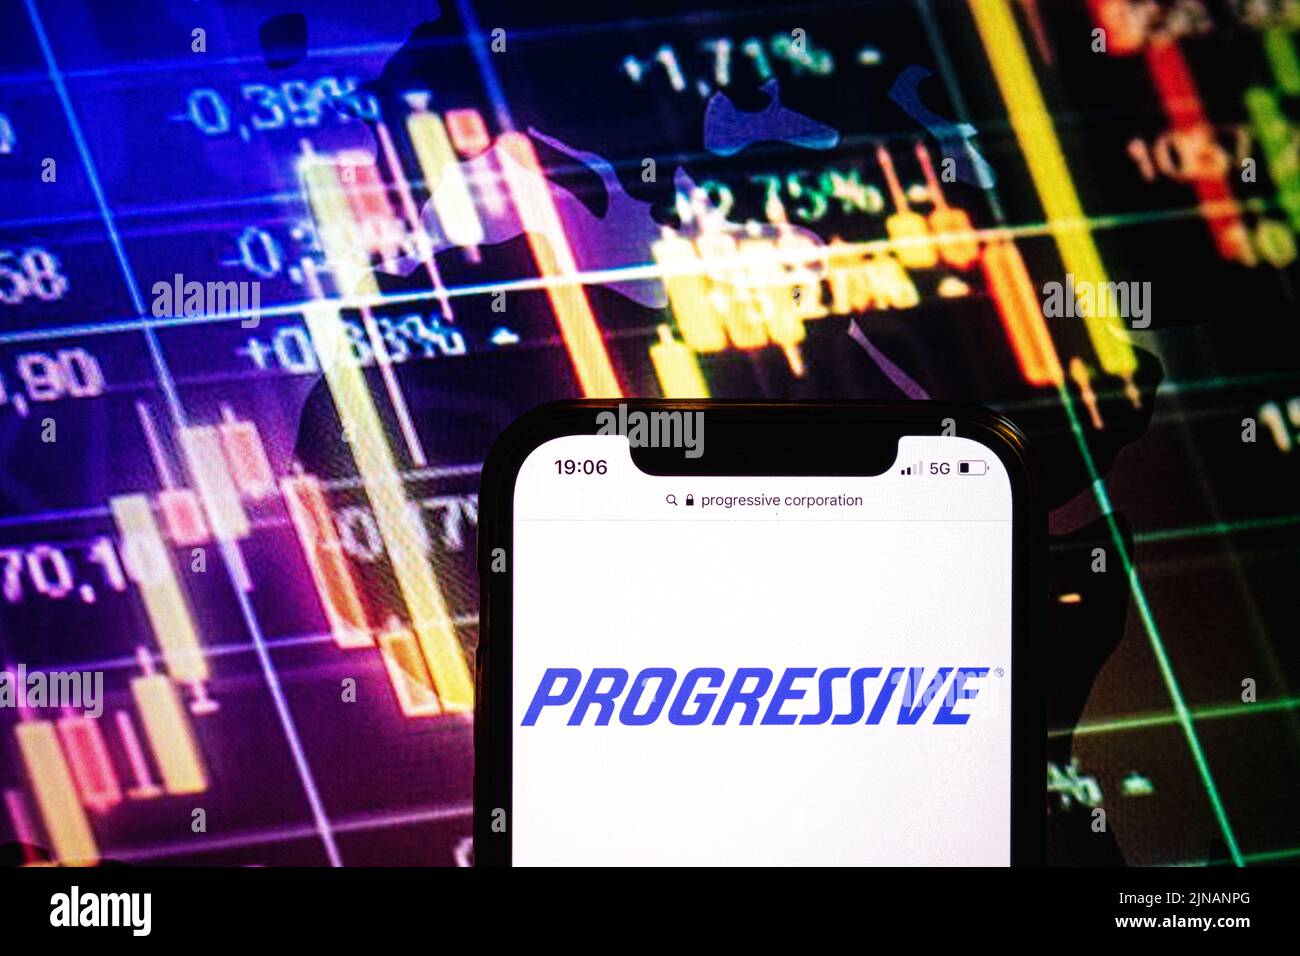 KONSKIE, POLAND - August 09, 2022: Smartphone displaying logo of Progressive company on stock exchange diagram background Stock Photo